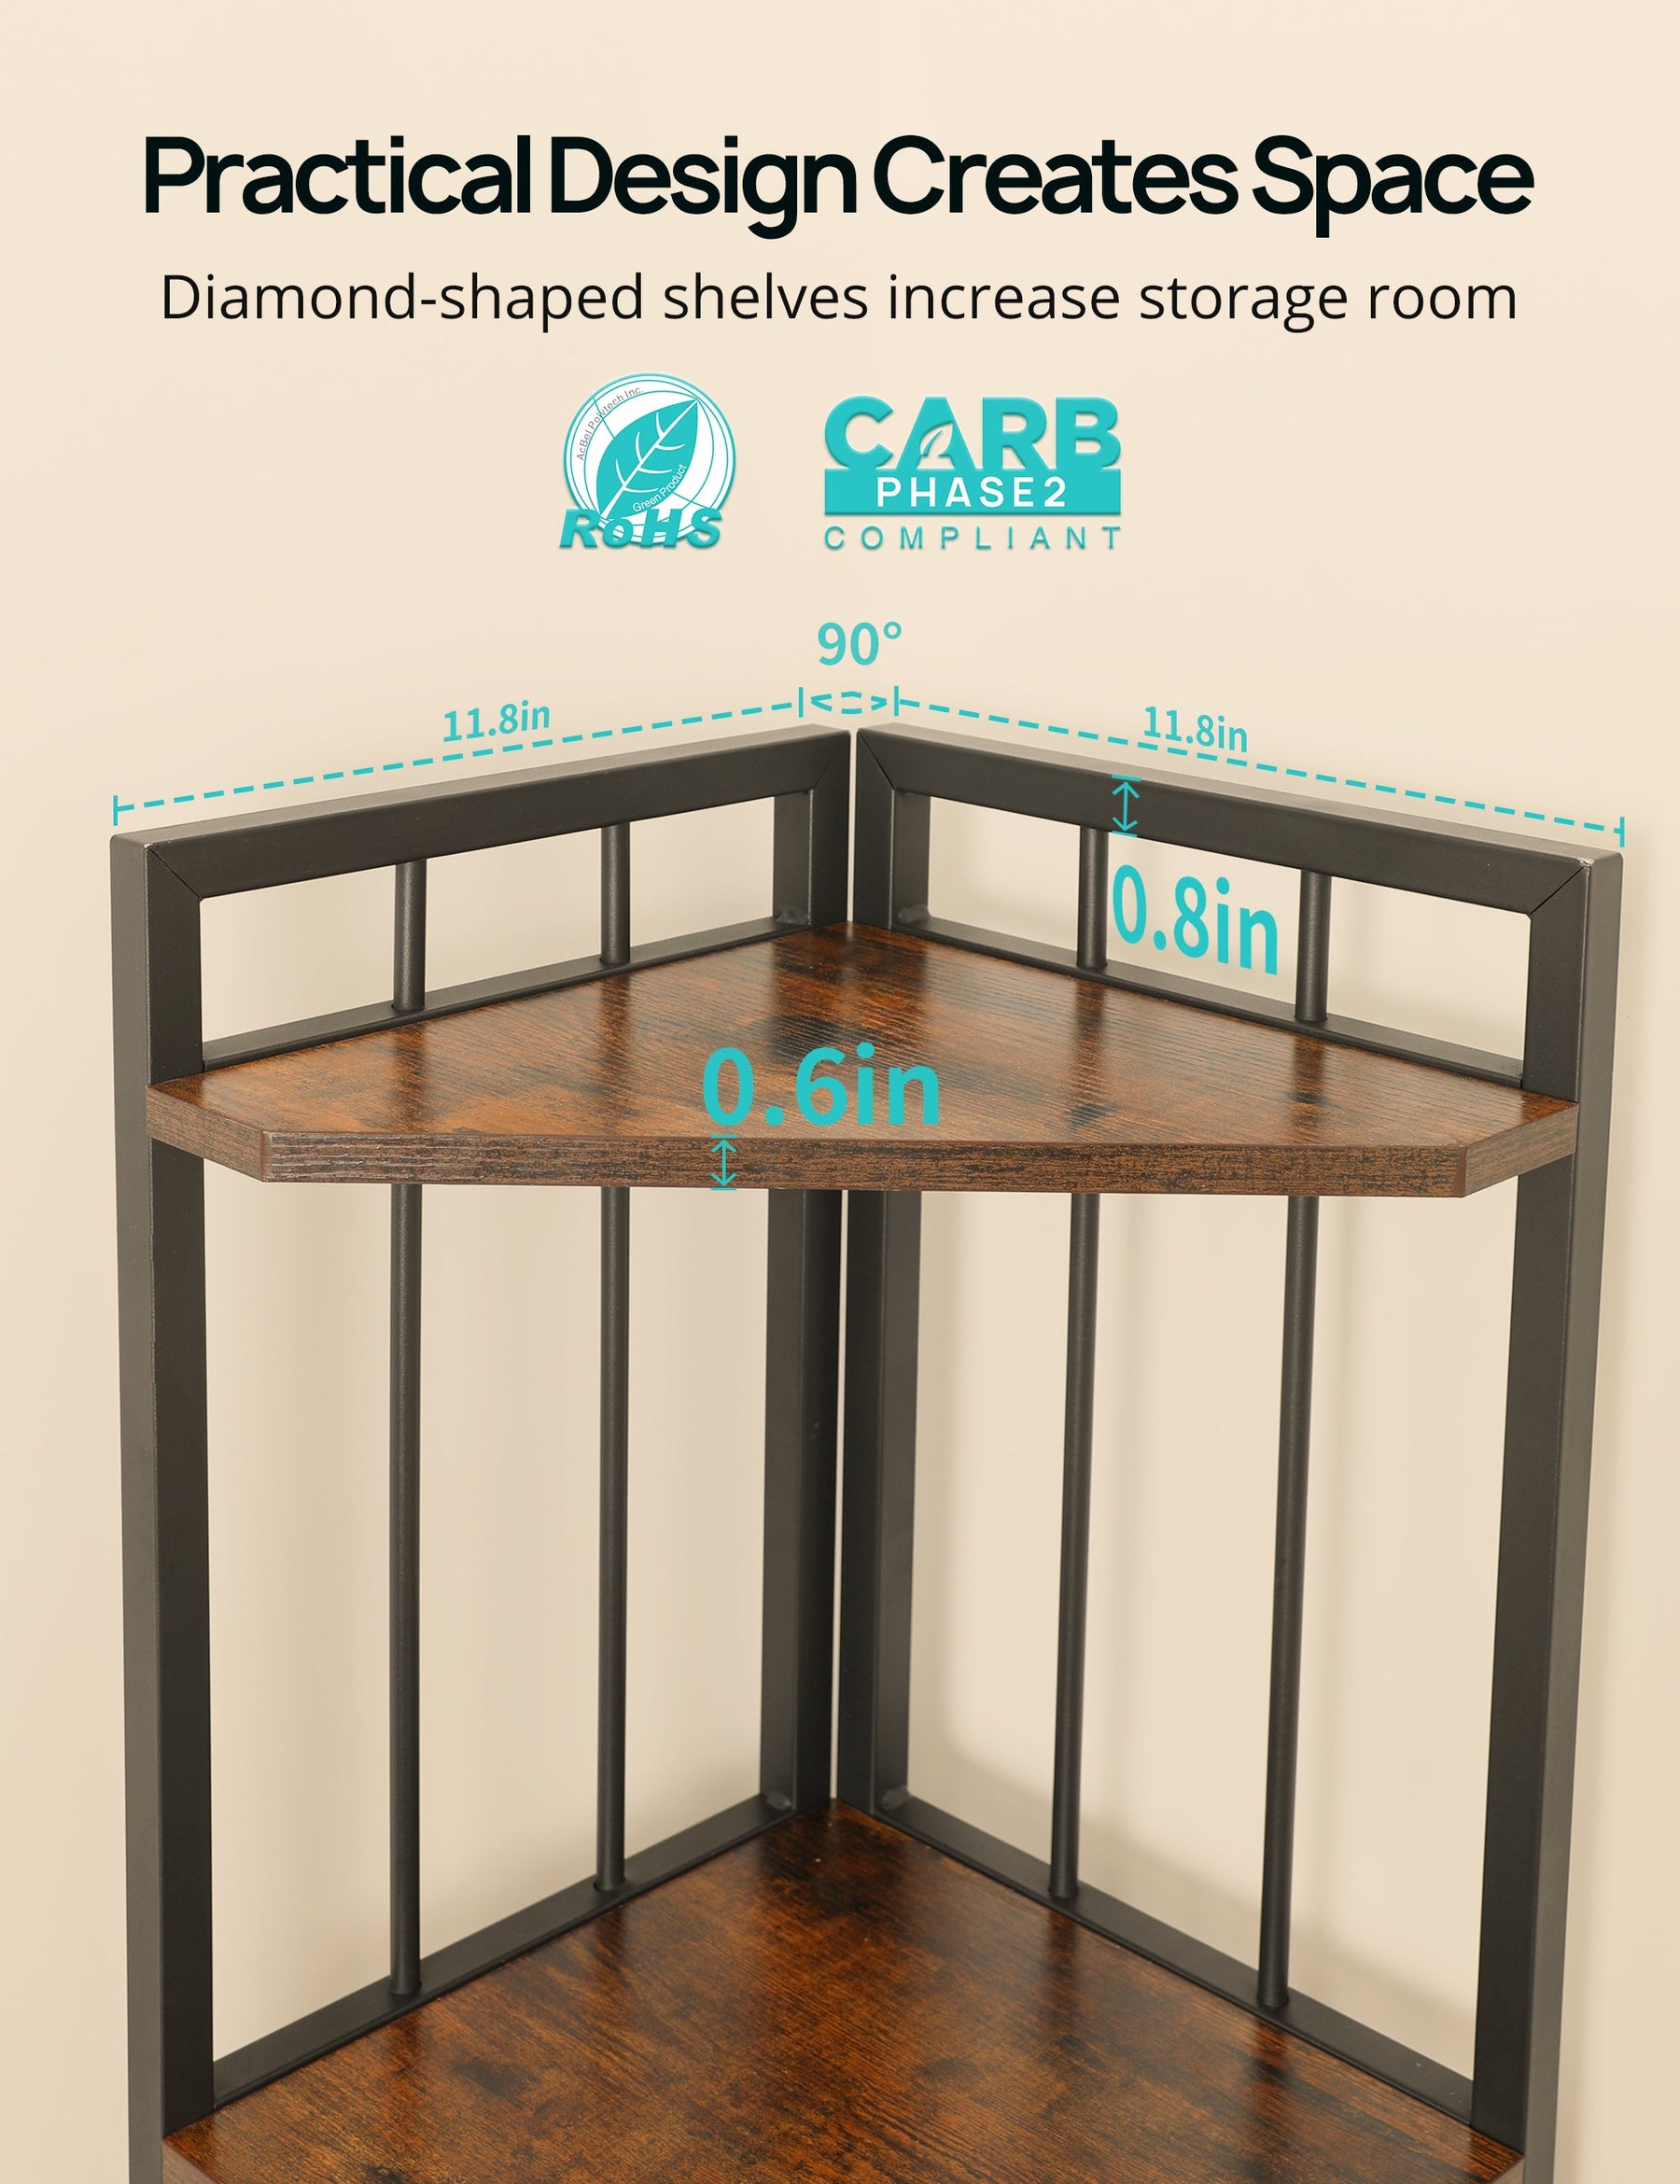 Corner Shelf 5-Tier with Storage, 71'' Industrial Rustic Tall Corner B